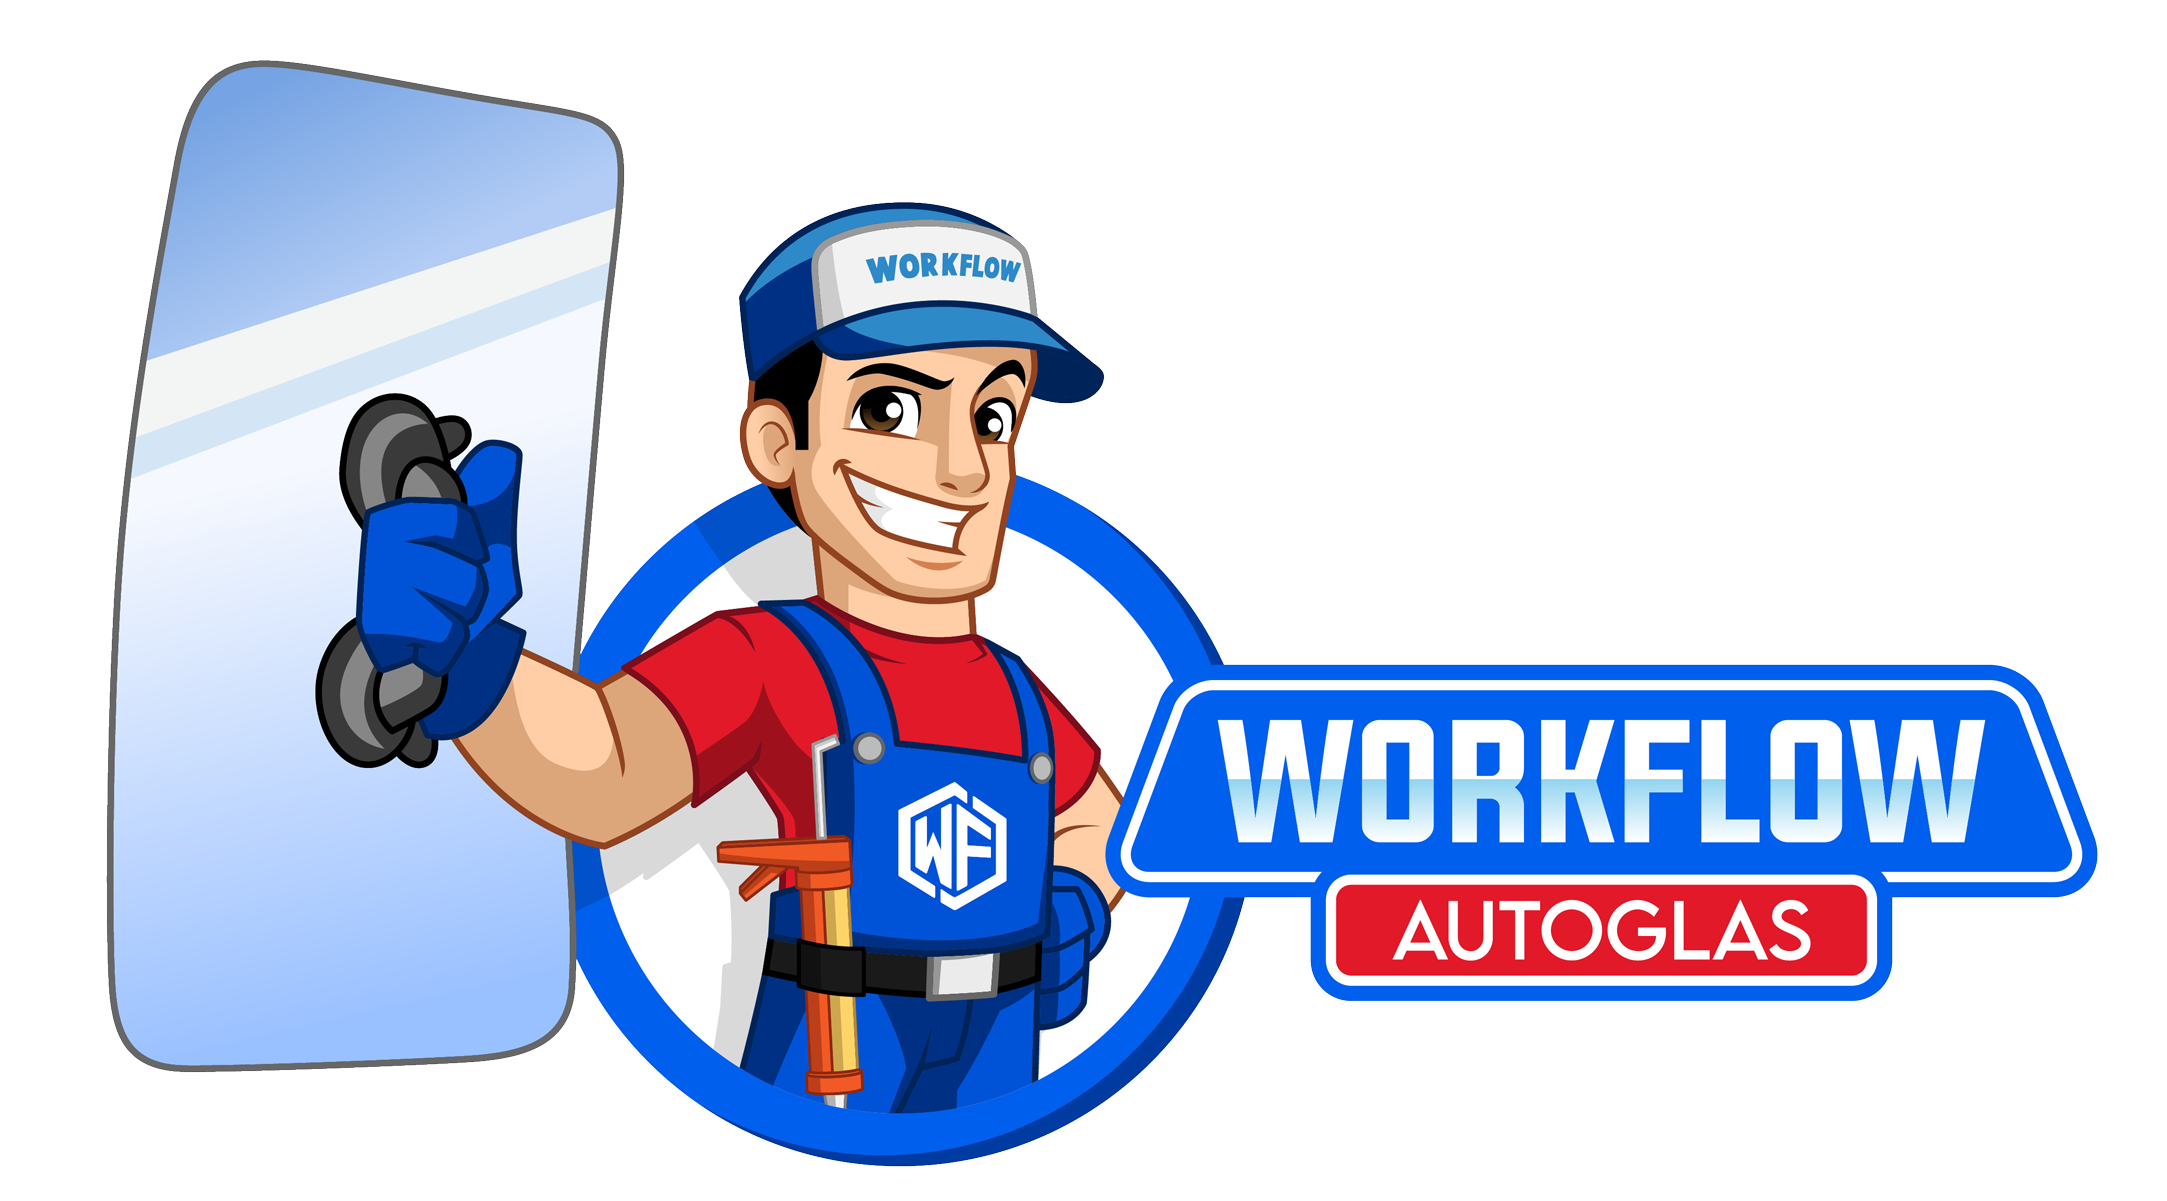 workflow-autoglas-logo-1